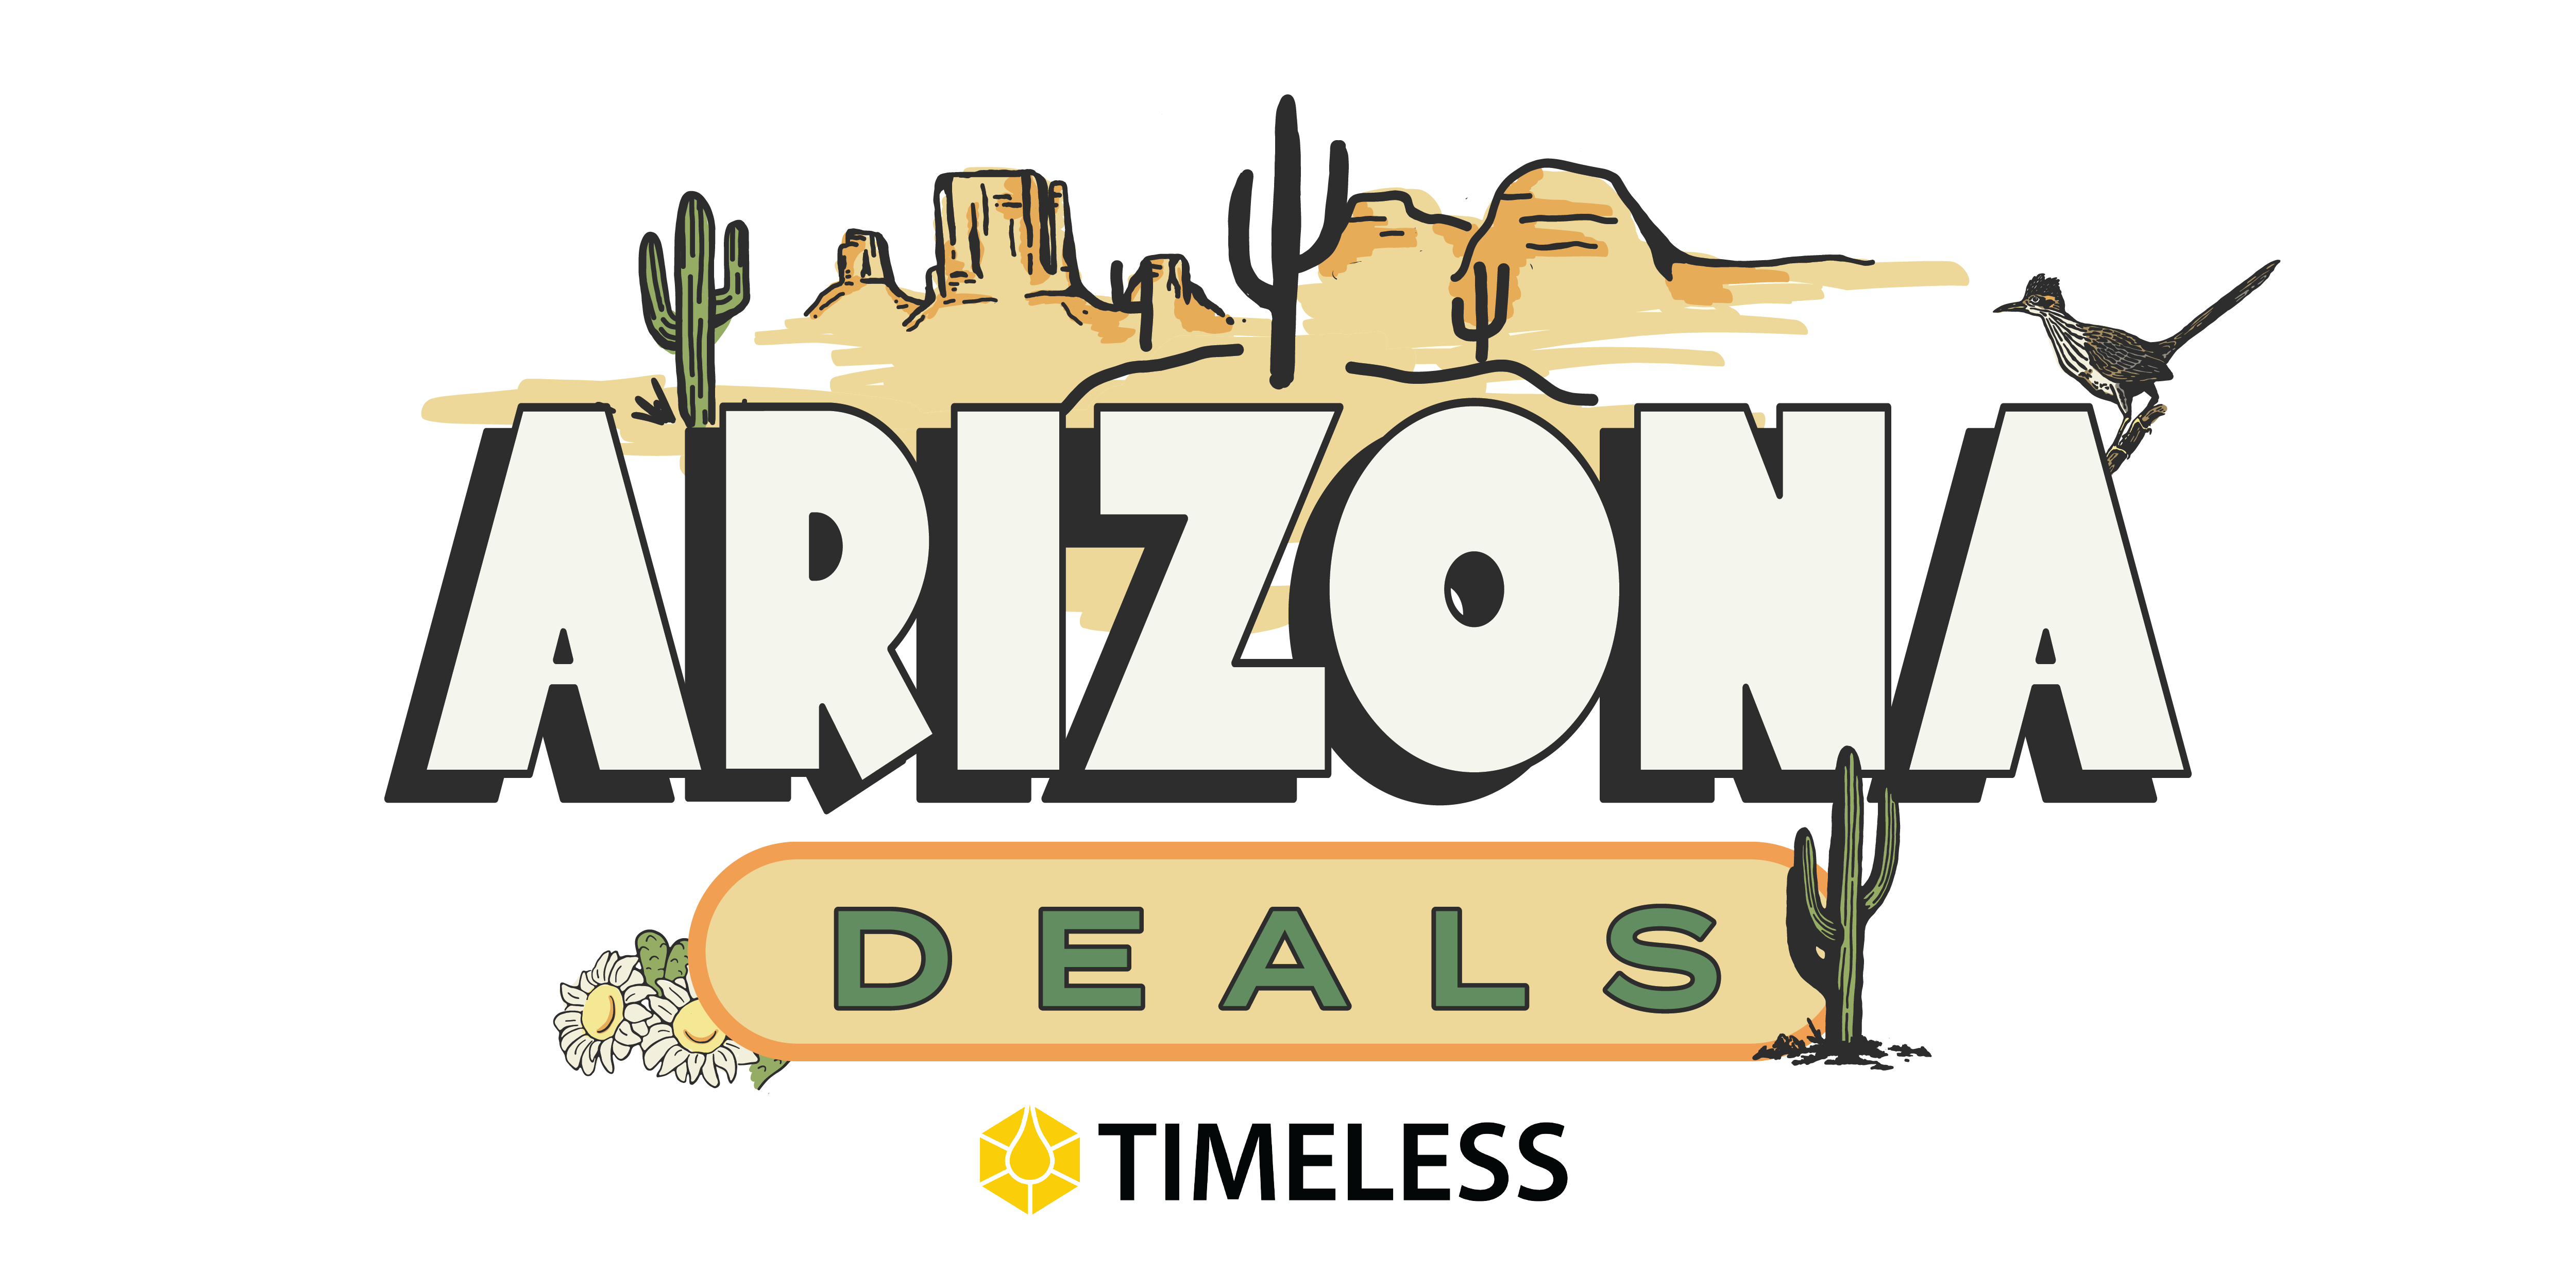 Timeless Deals in Arizona